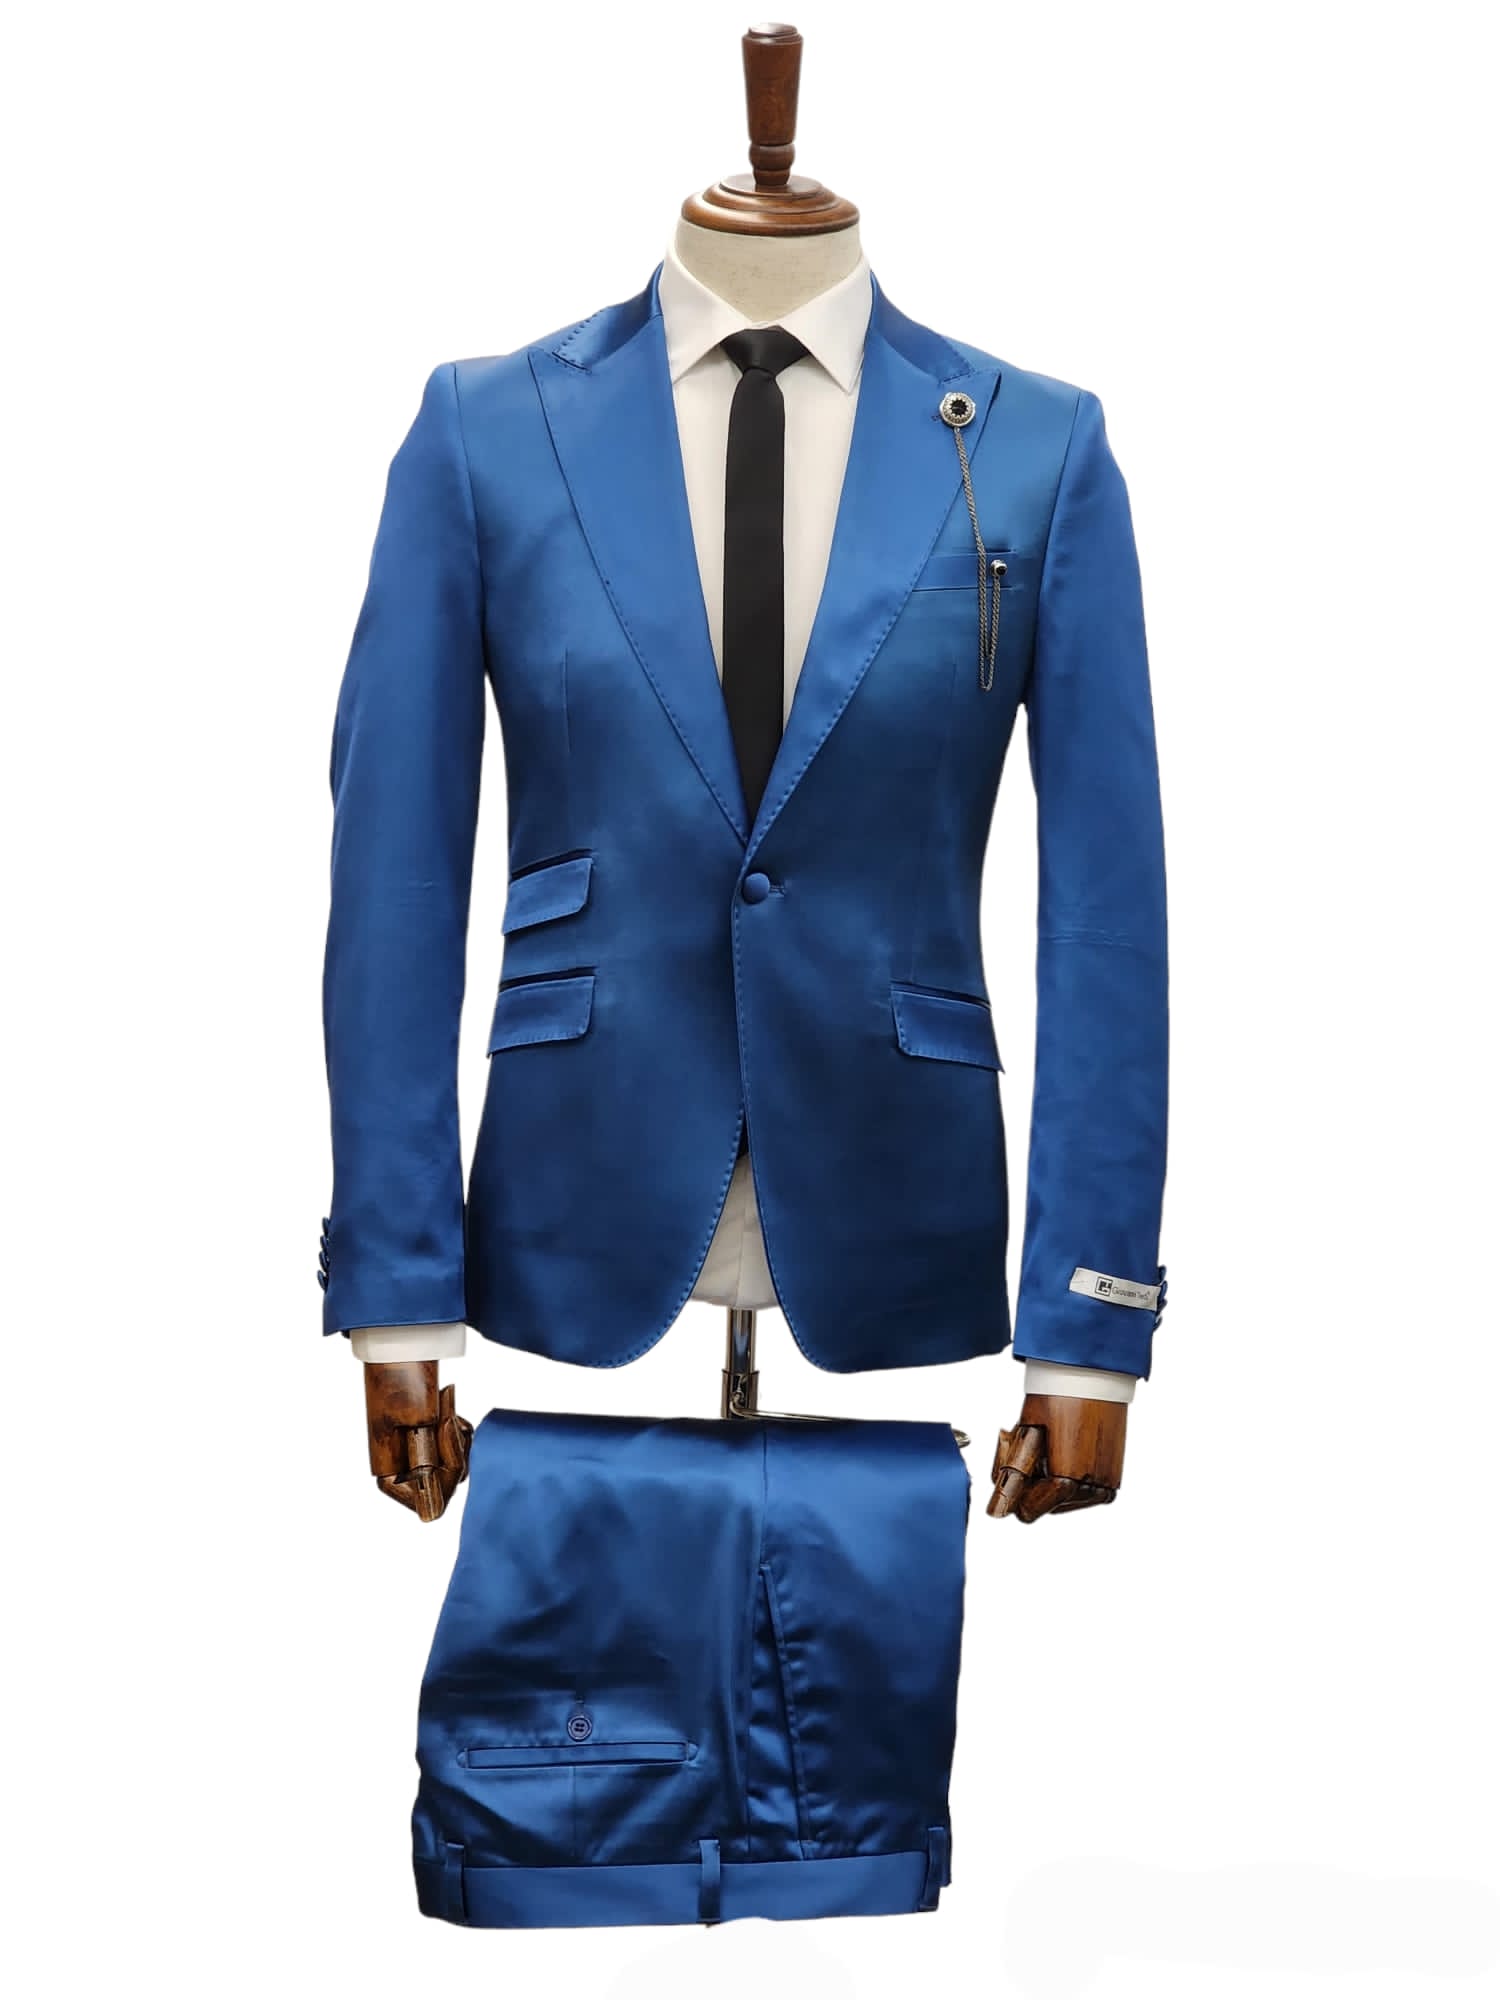 Giovanni Fabroni Blue Jacket Suit Size 52 Article No. 017-39 | eBay